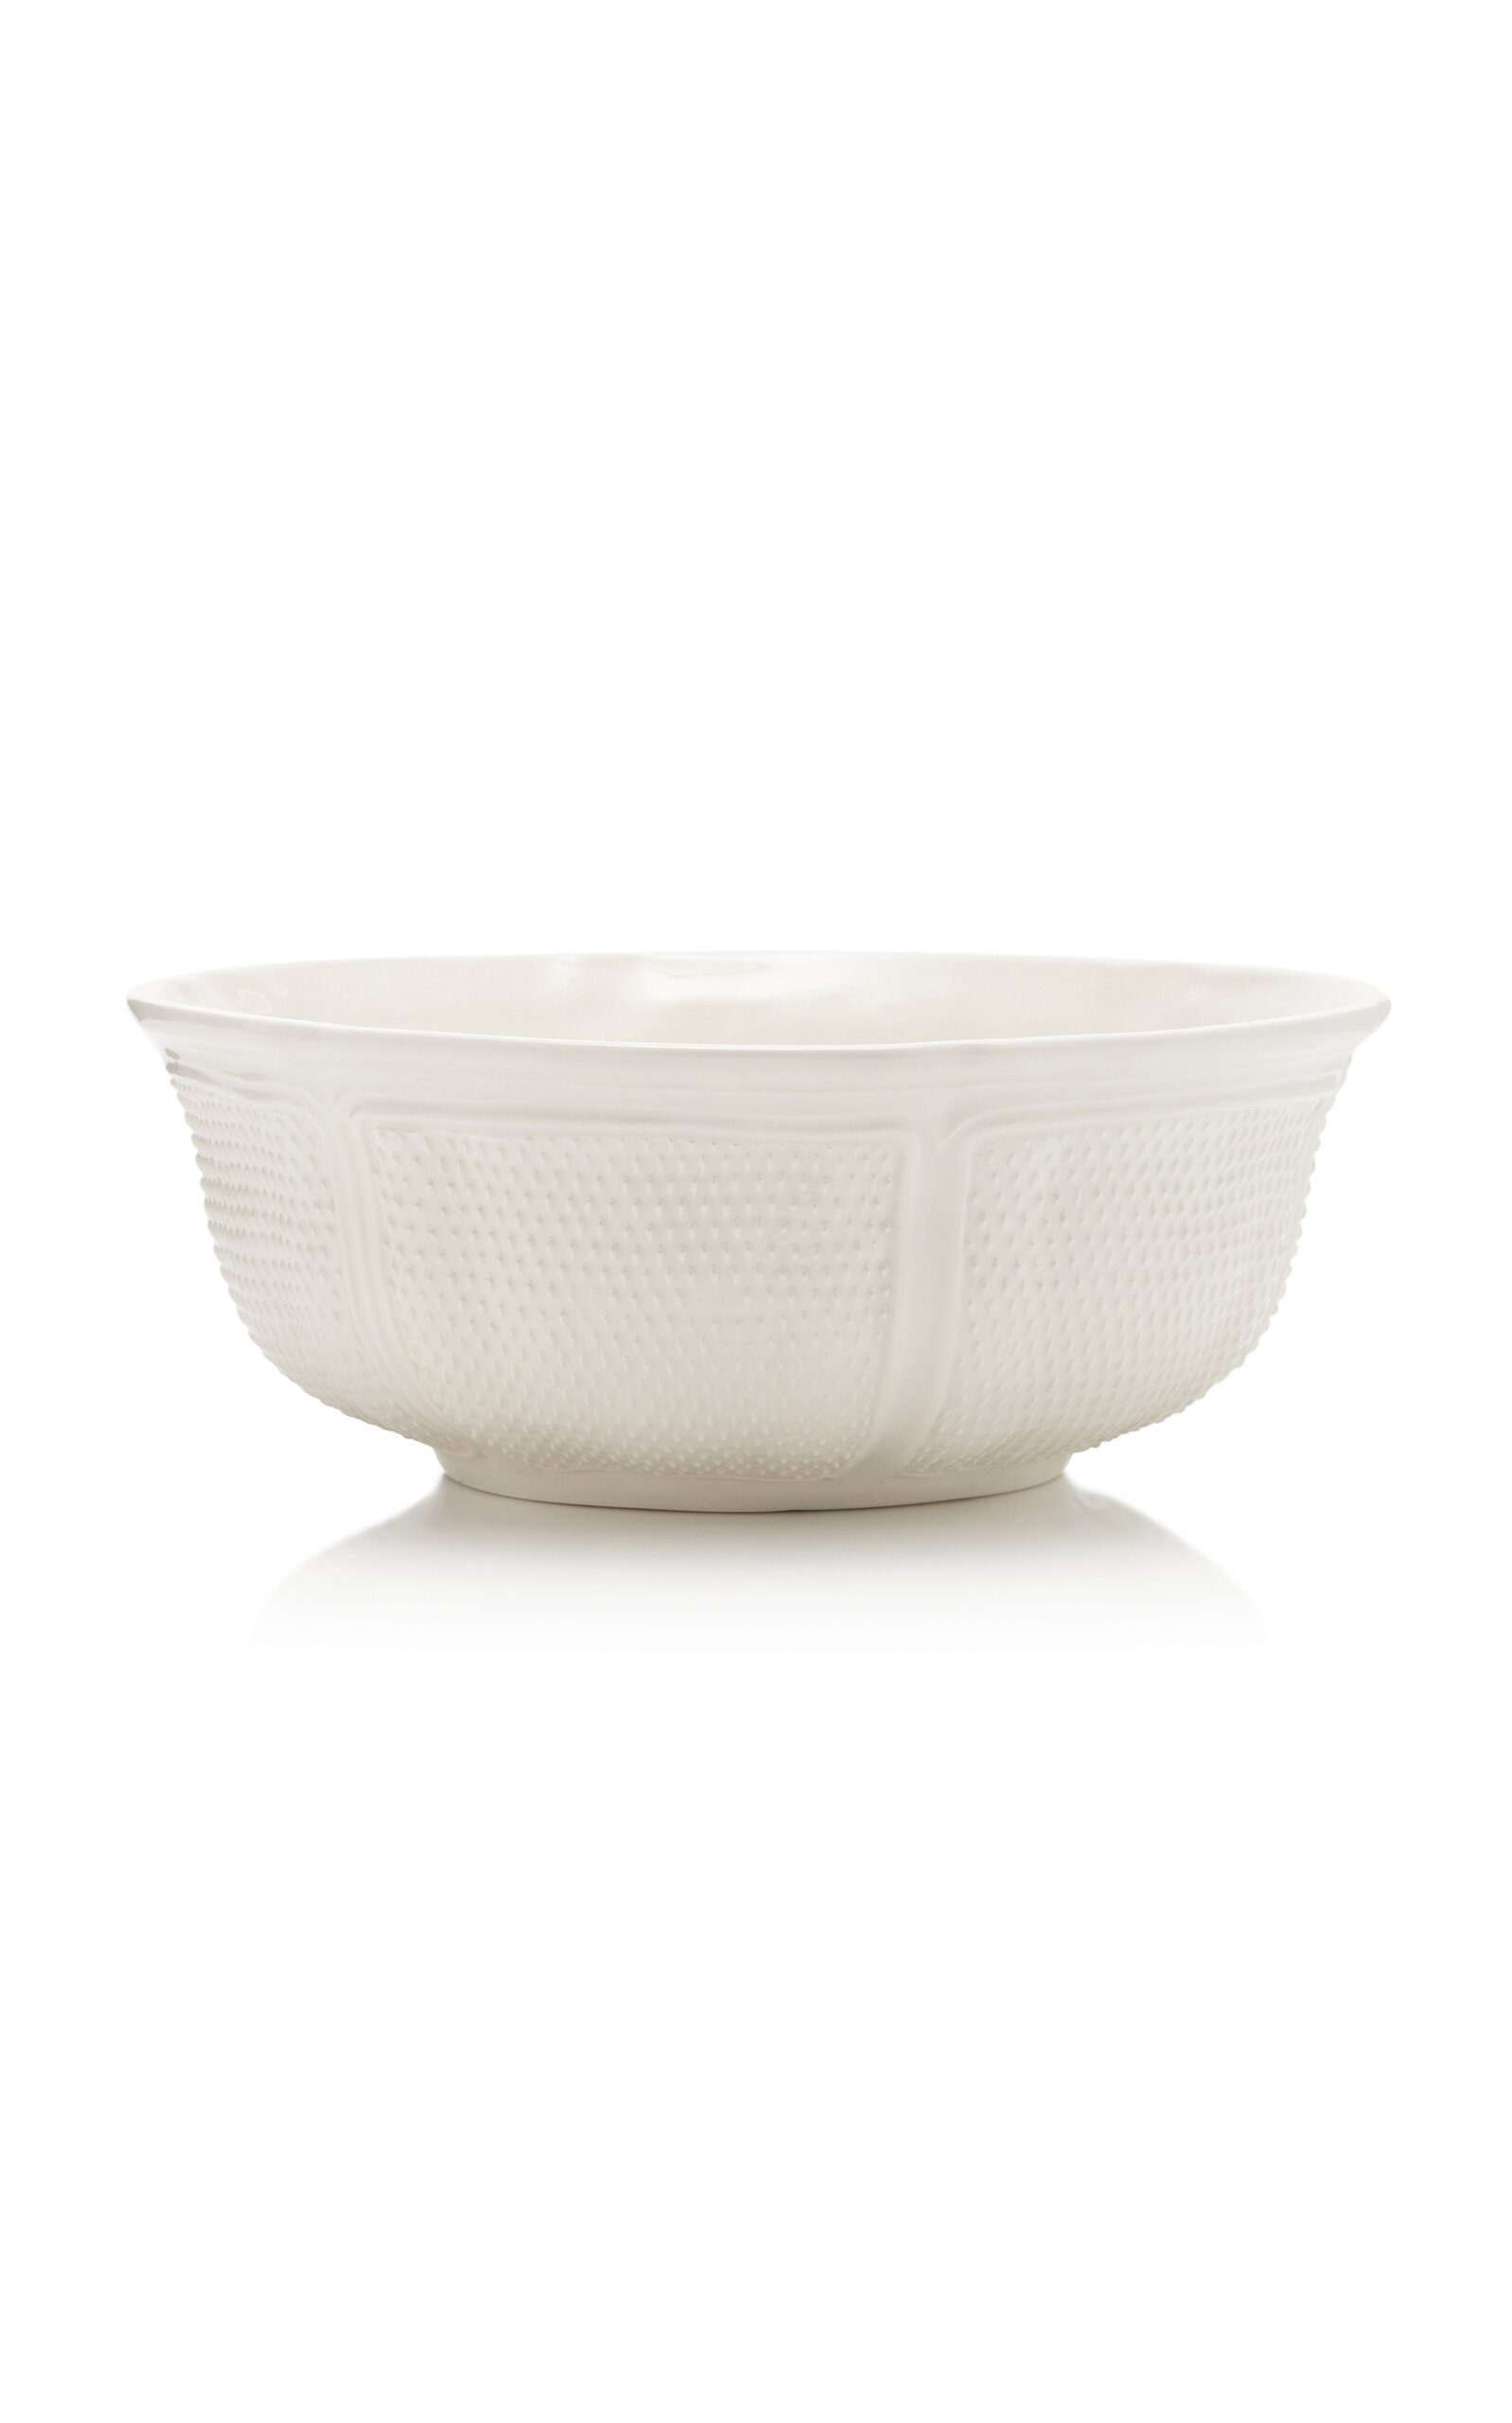 Moda Domus Large Doots Creamware Salad Bowl In White